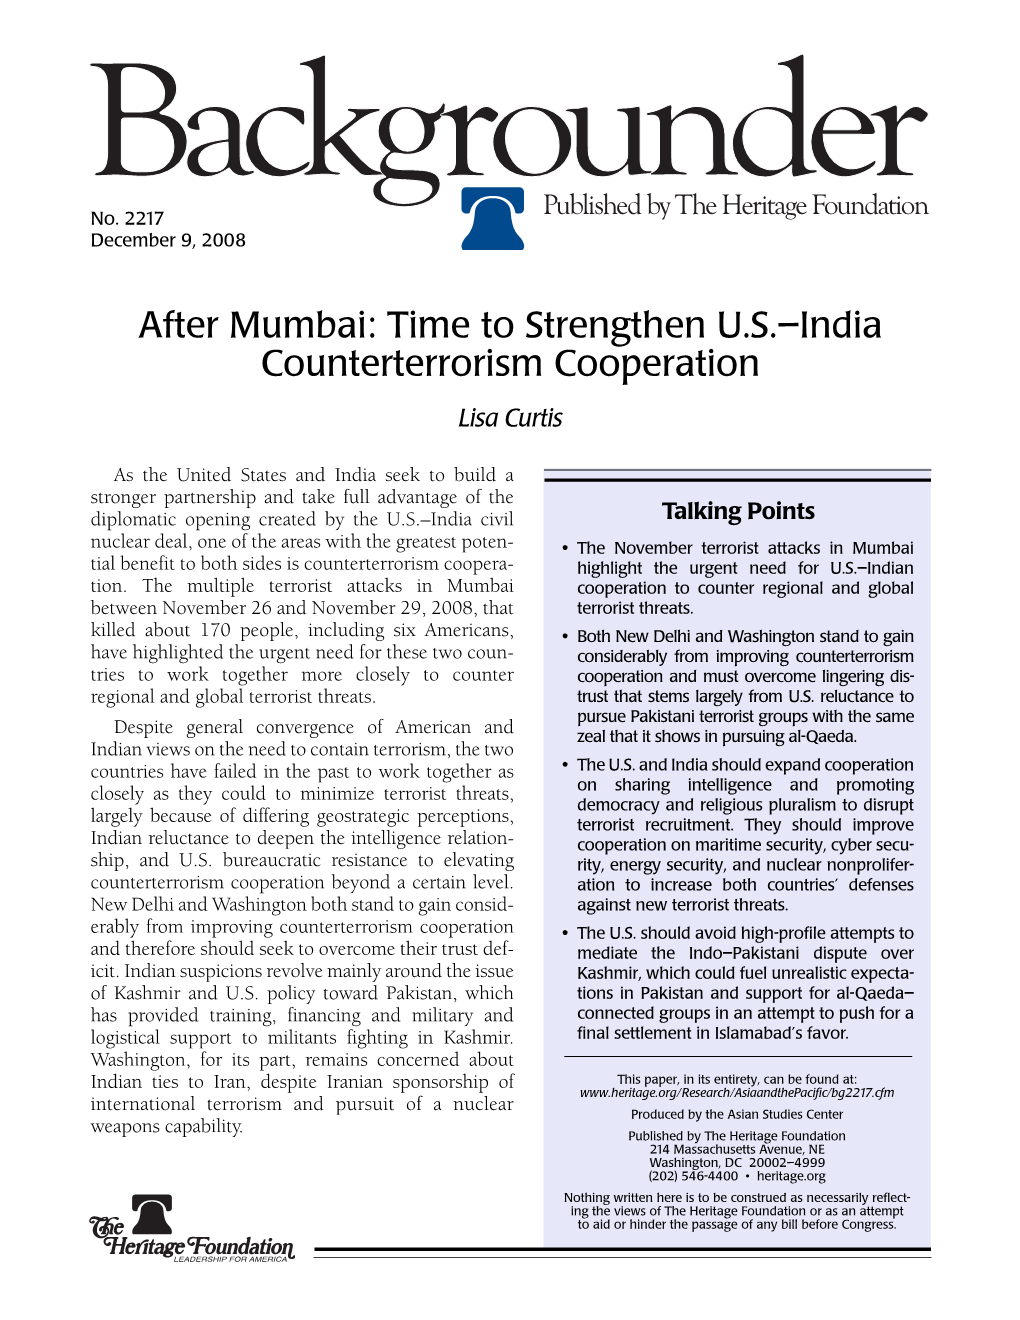 After Mumbai: Time to Strengthen U.S.–India Counterterrorism Cooperation Lisa Curtis